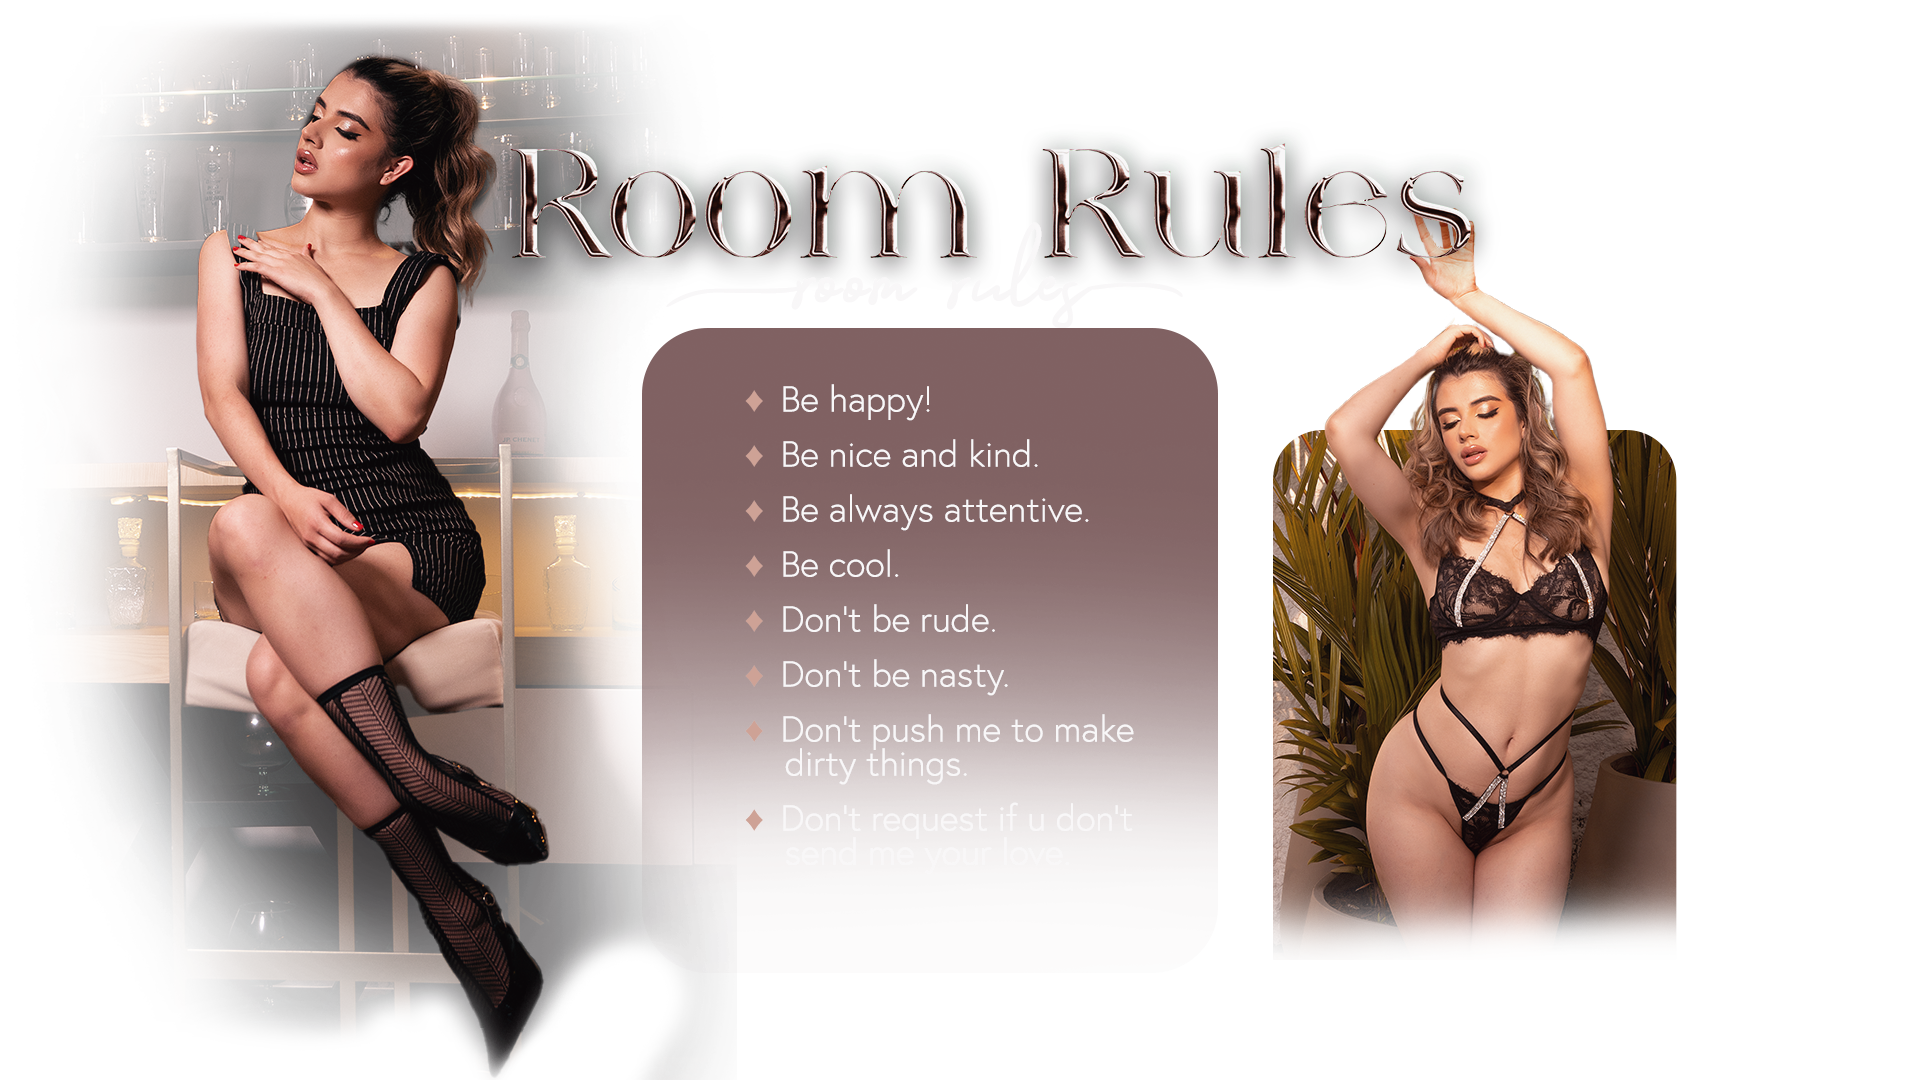 KatyRousse Room Rules image: 1